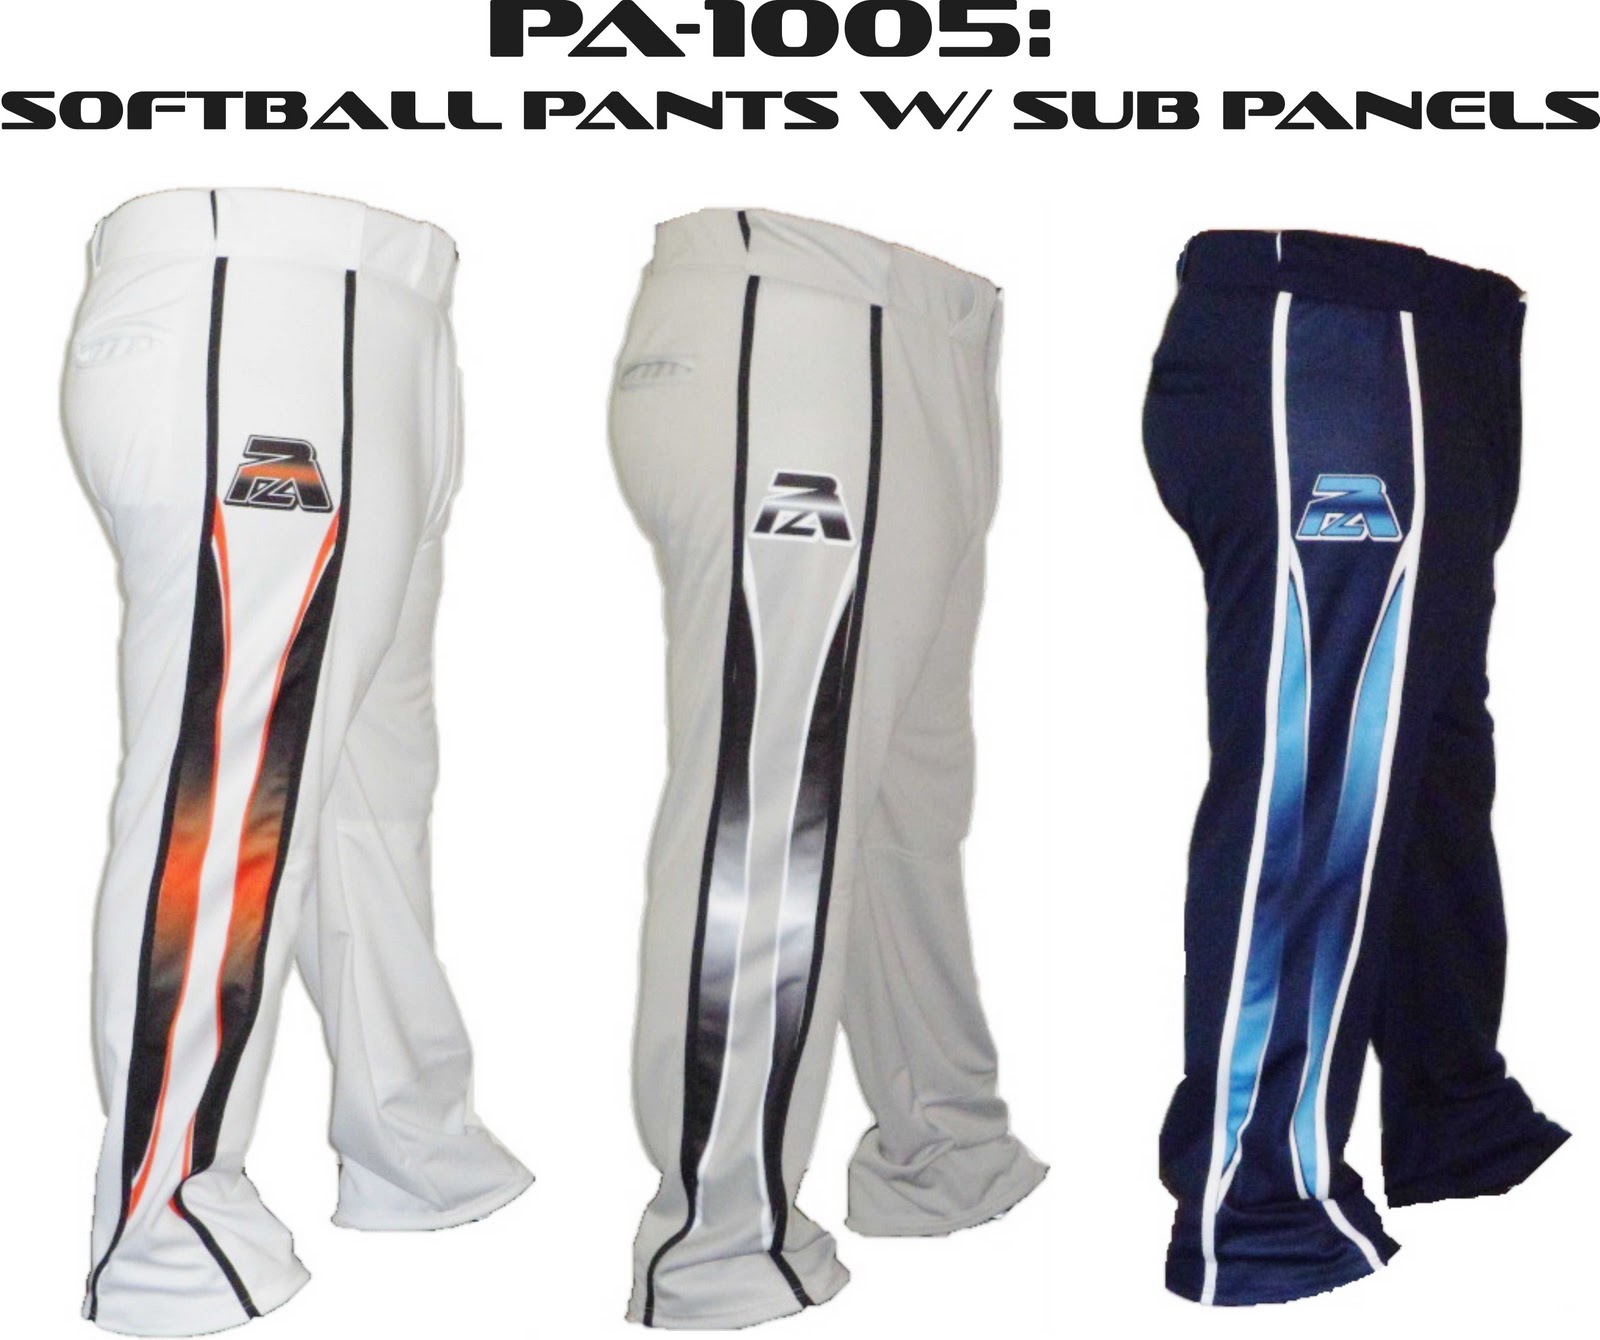 PREMIER ATHLETICS: NEW!!! Premier Athletics Softball Pants